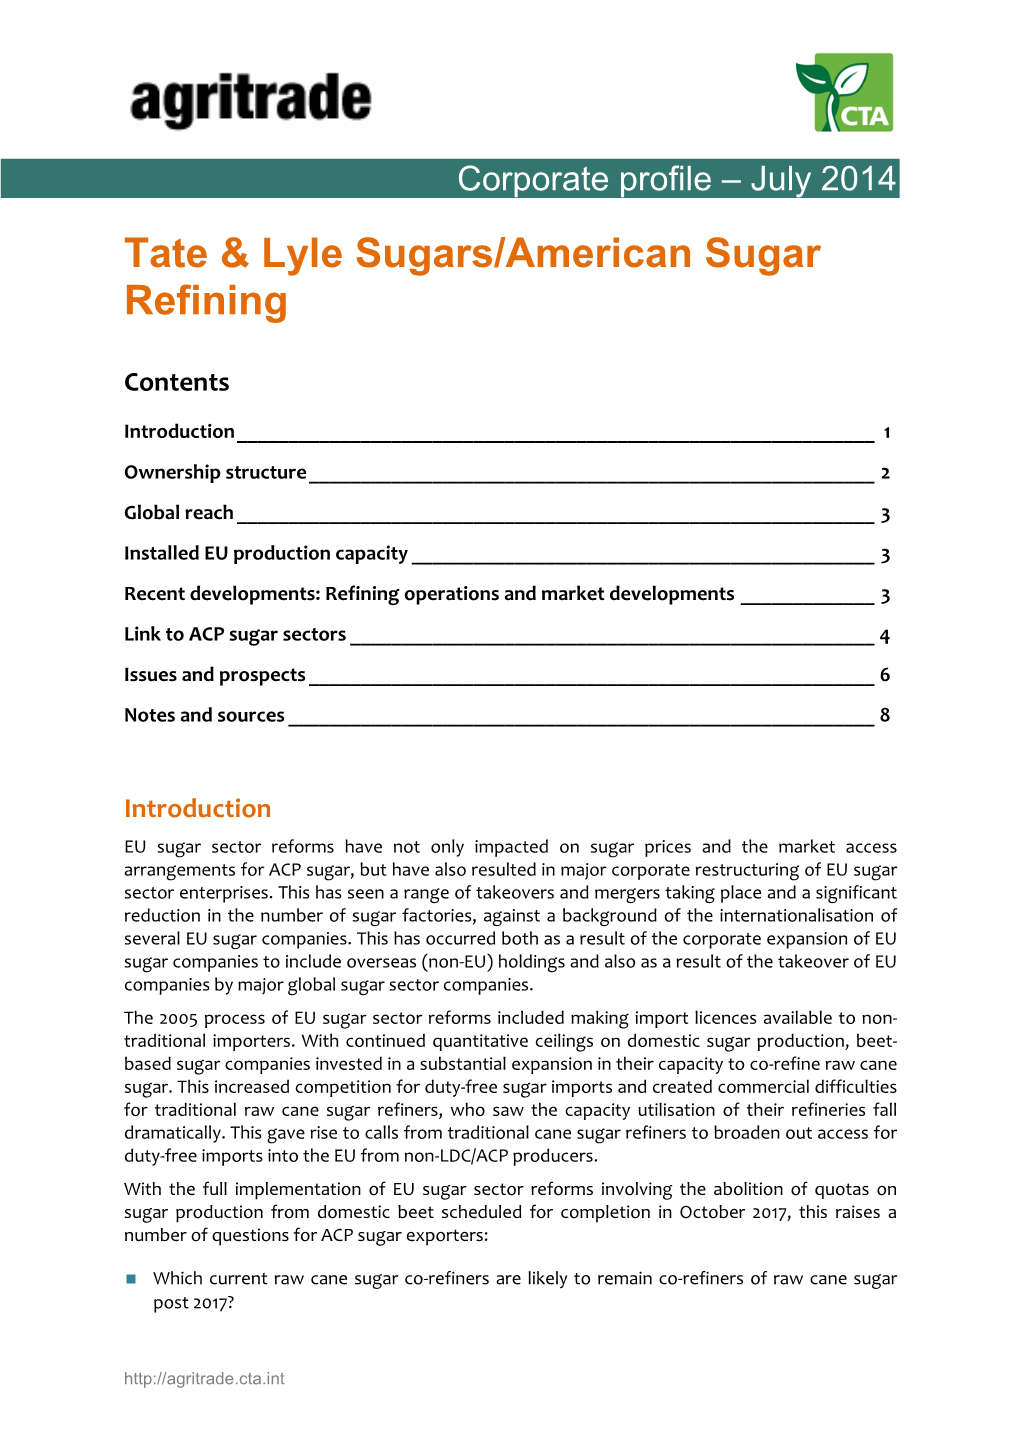 Tate & Lyle Sugars/American Sugar Refining